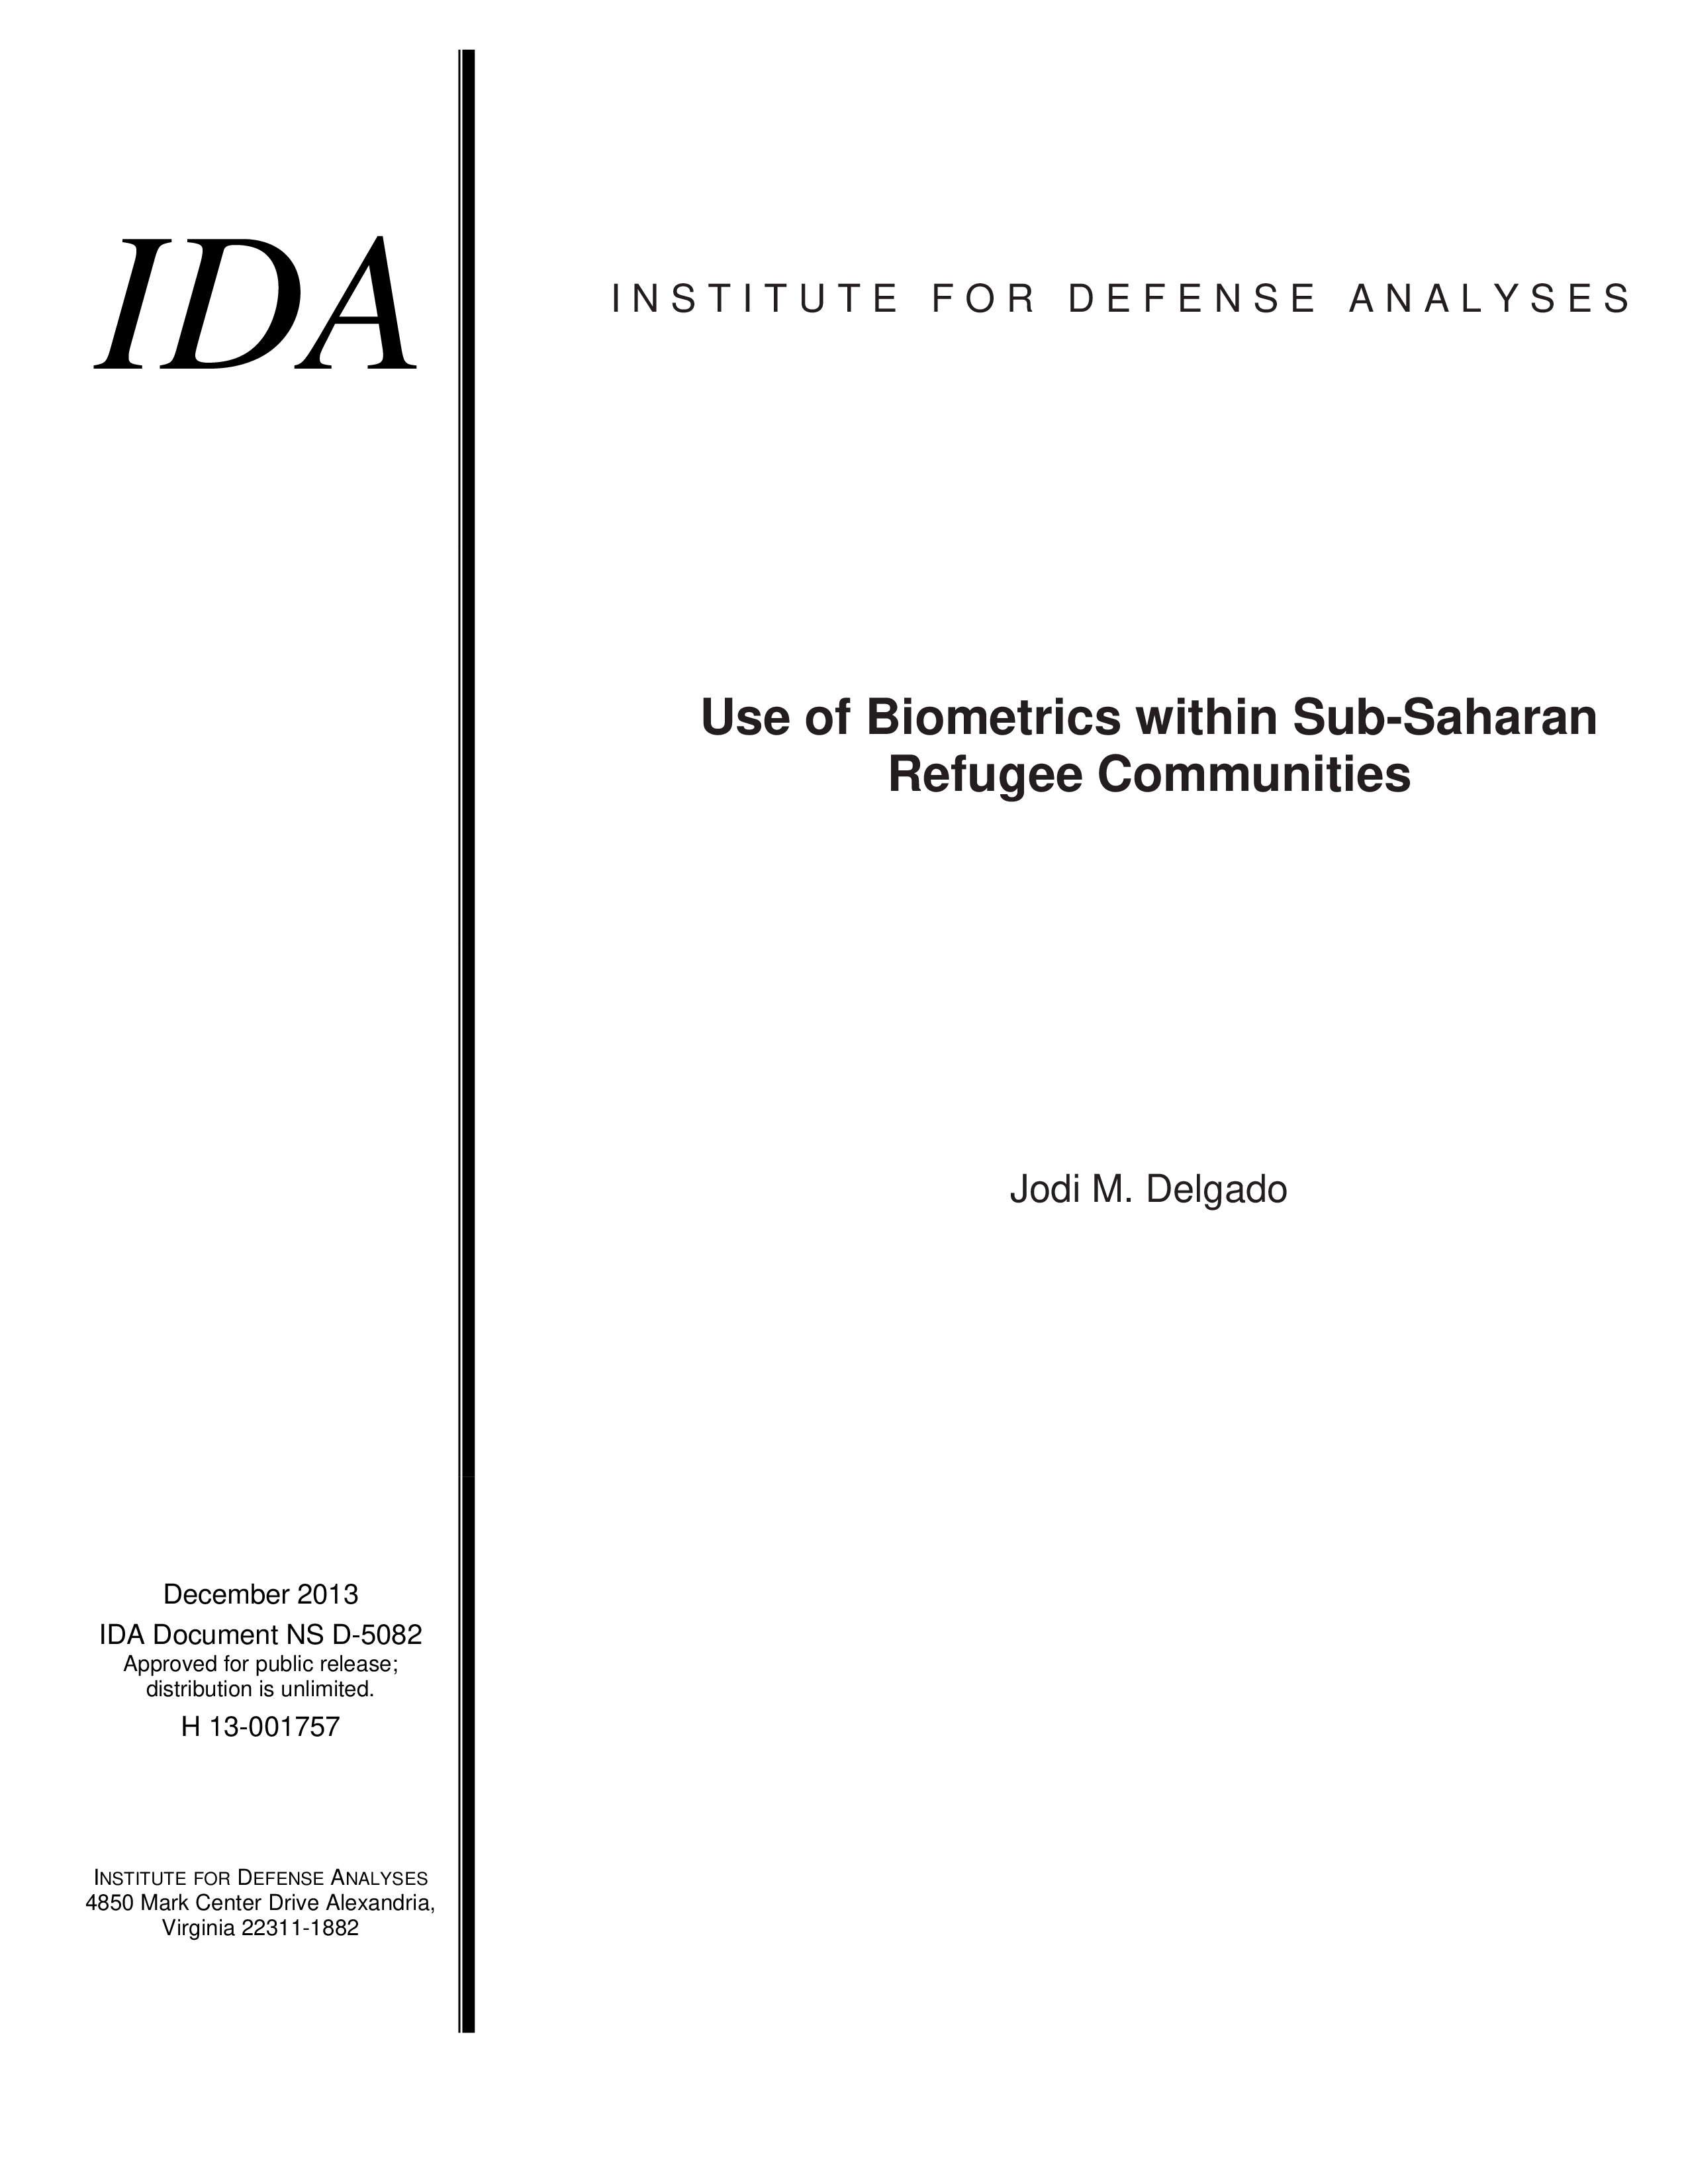 Use of Biometrics within Sub-Saharan Refugee Communities